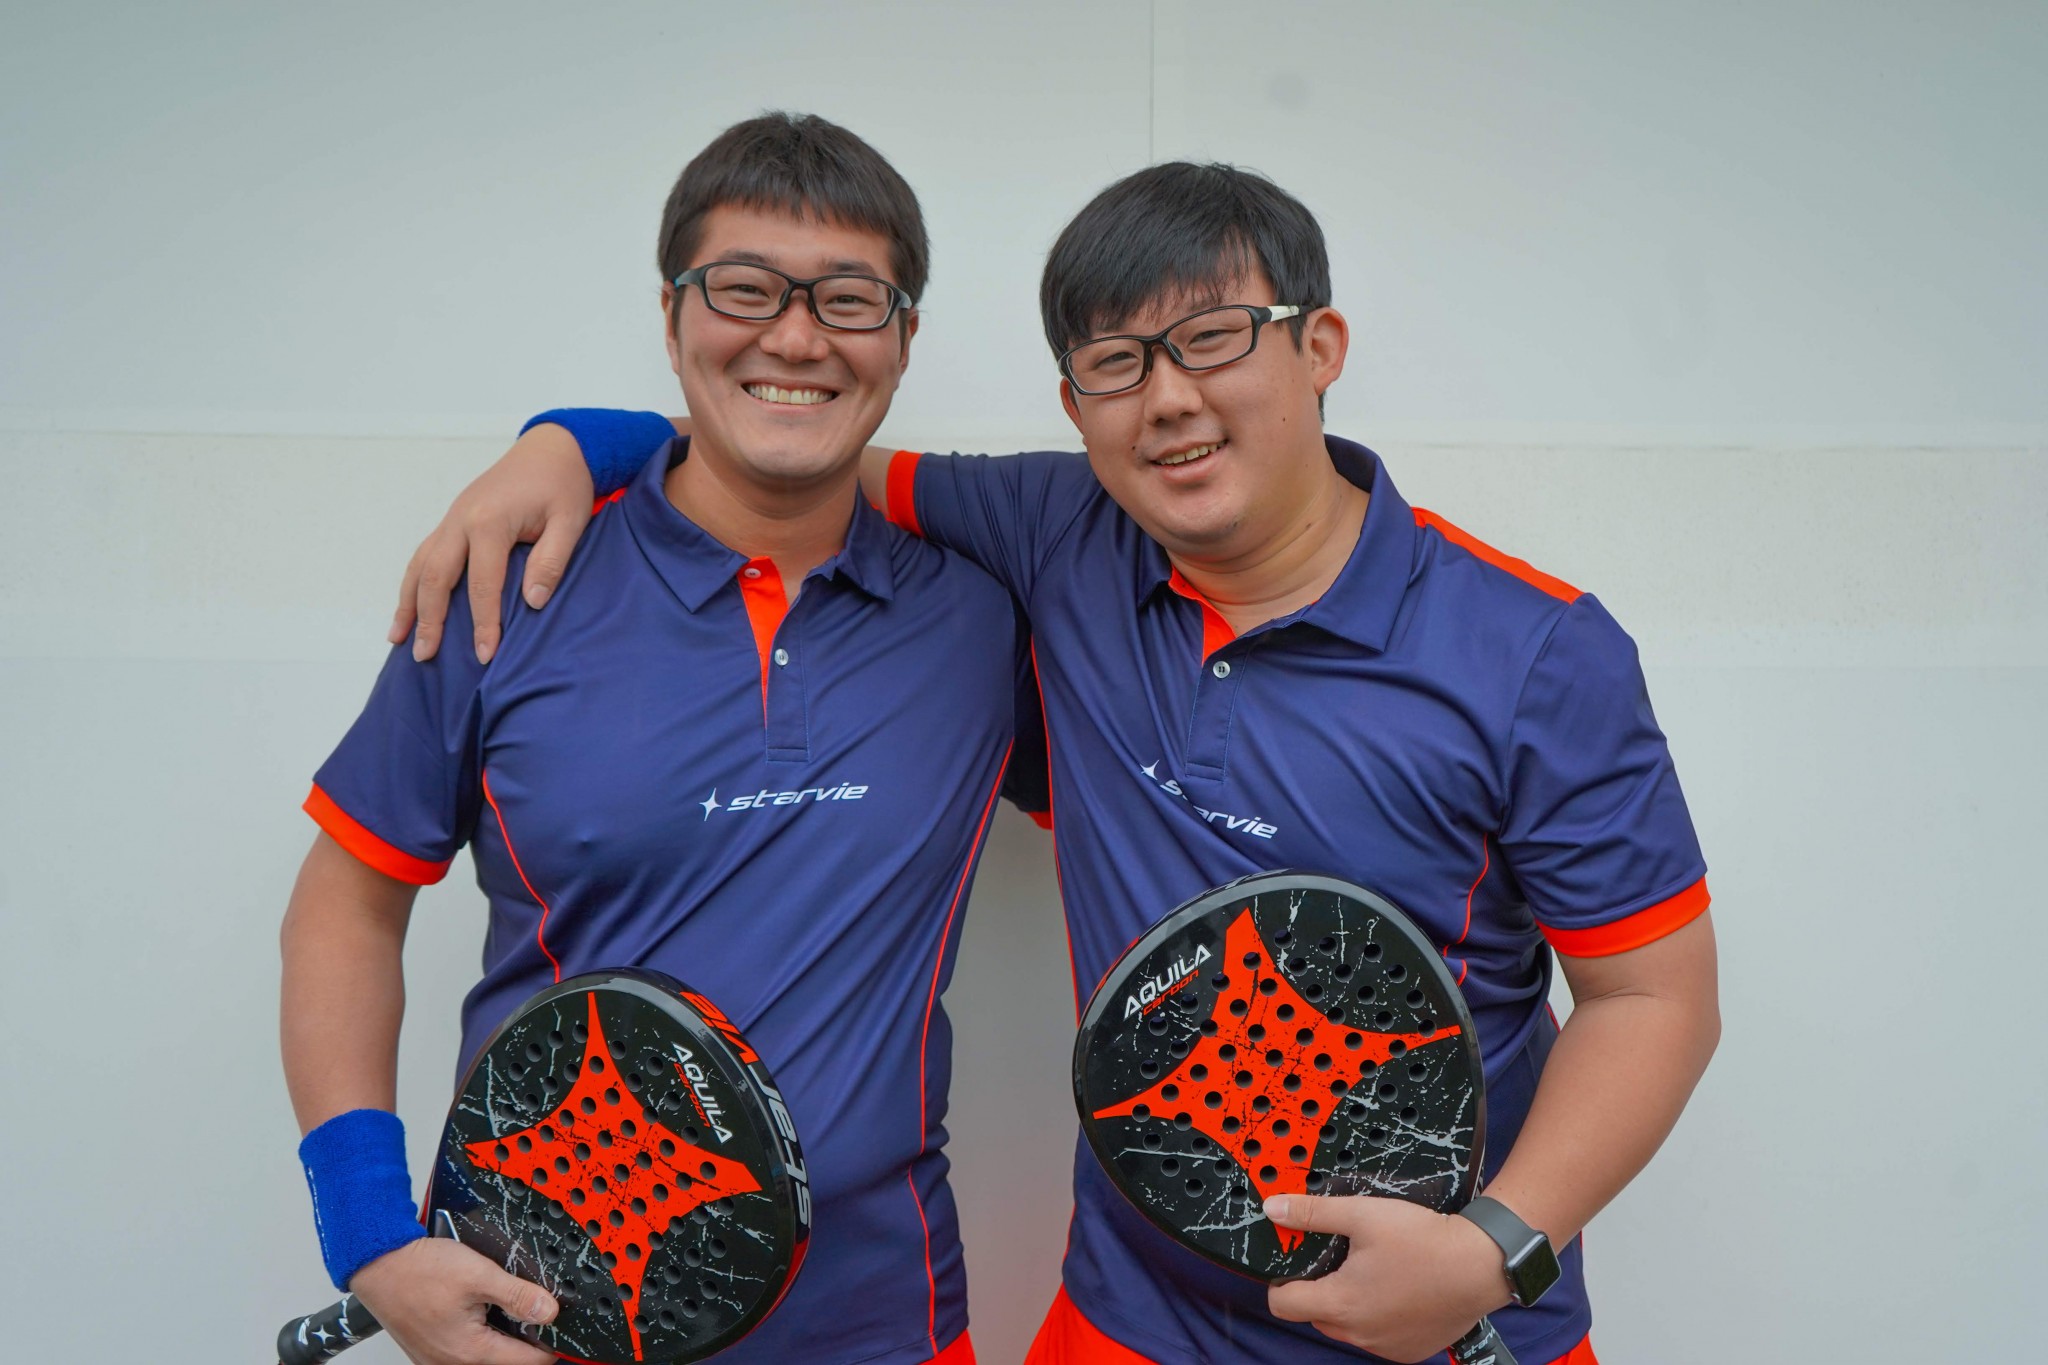 Eiichiro Okuyama and Tomoaki Murasawa, nuevos jugadores japoneses del team StarVie